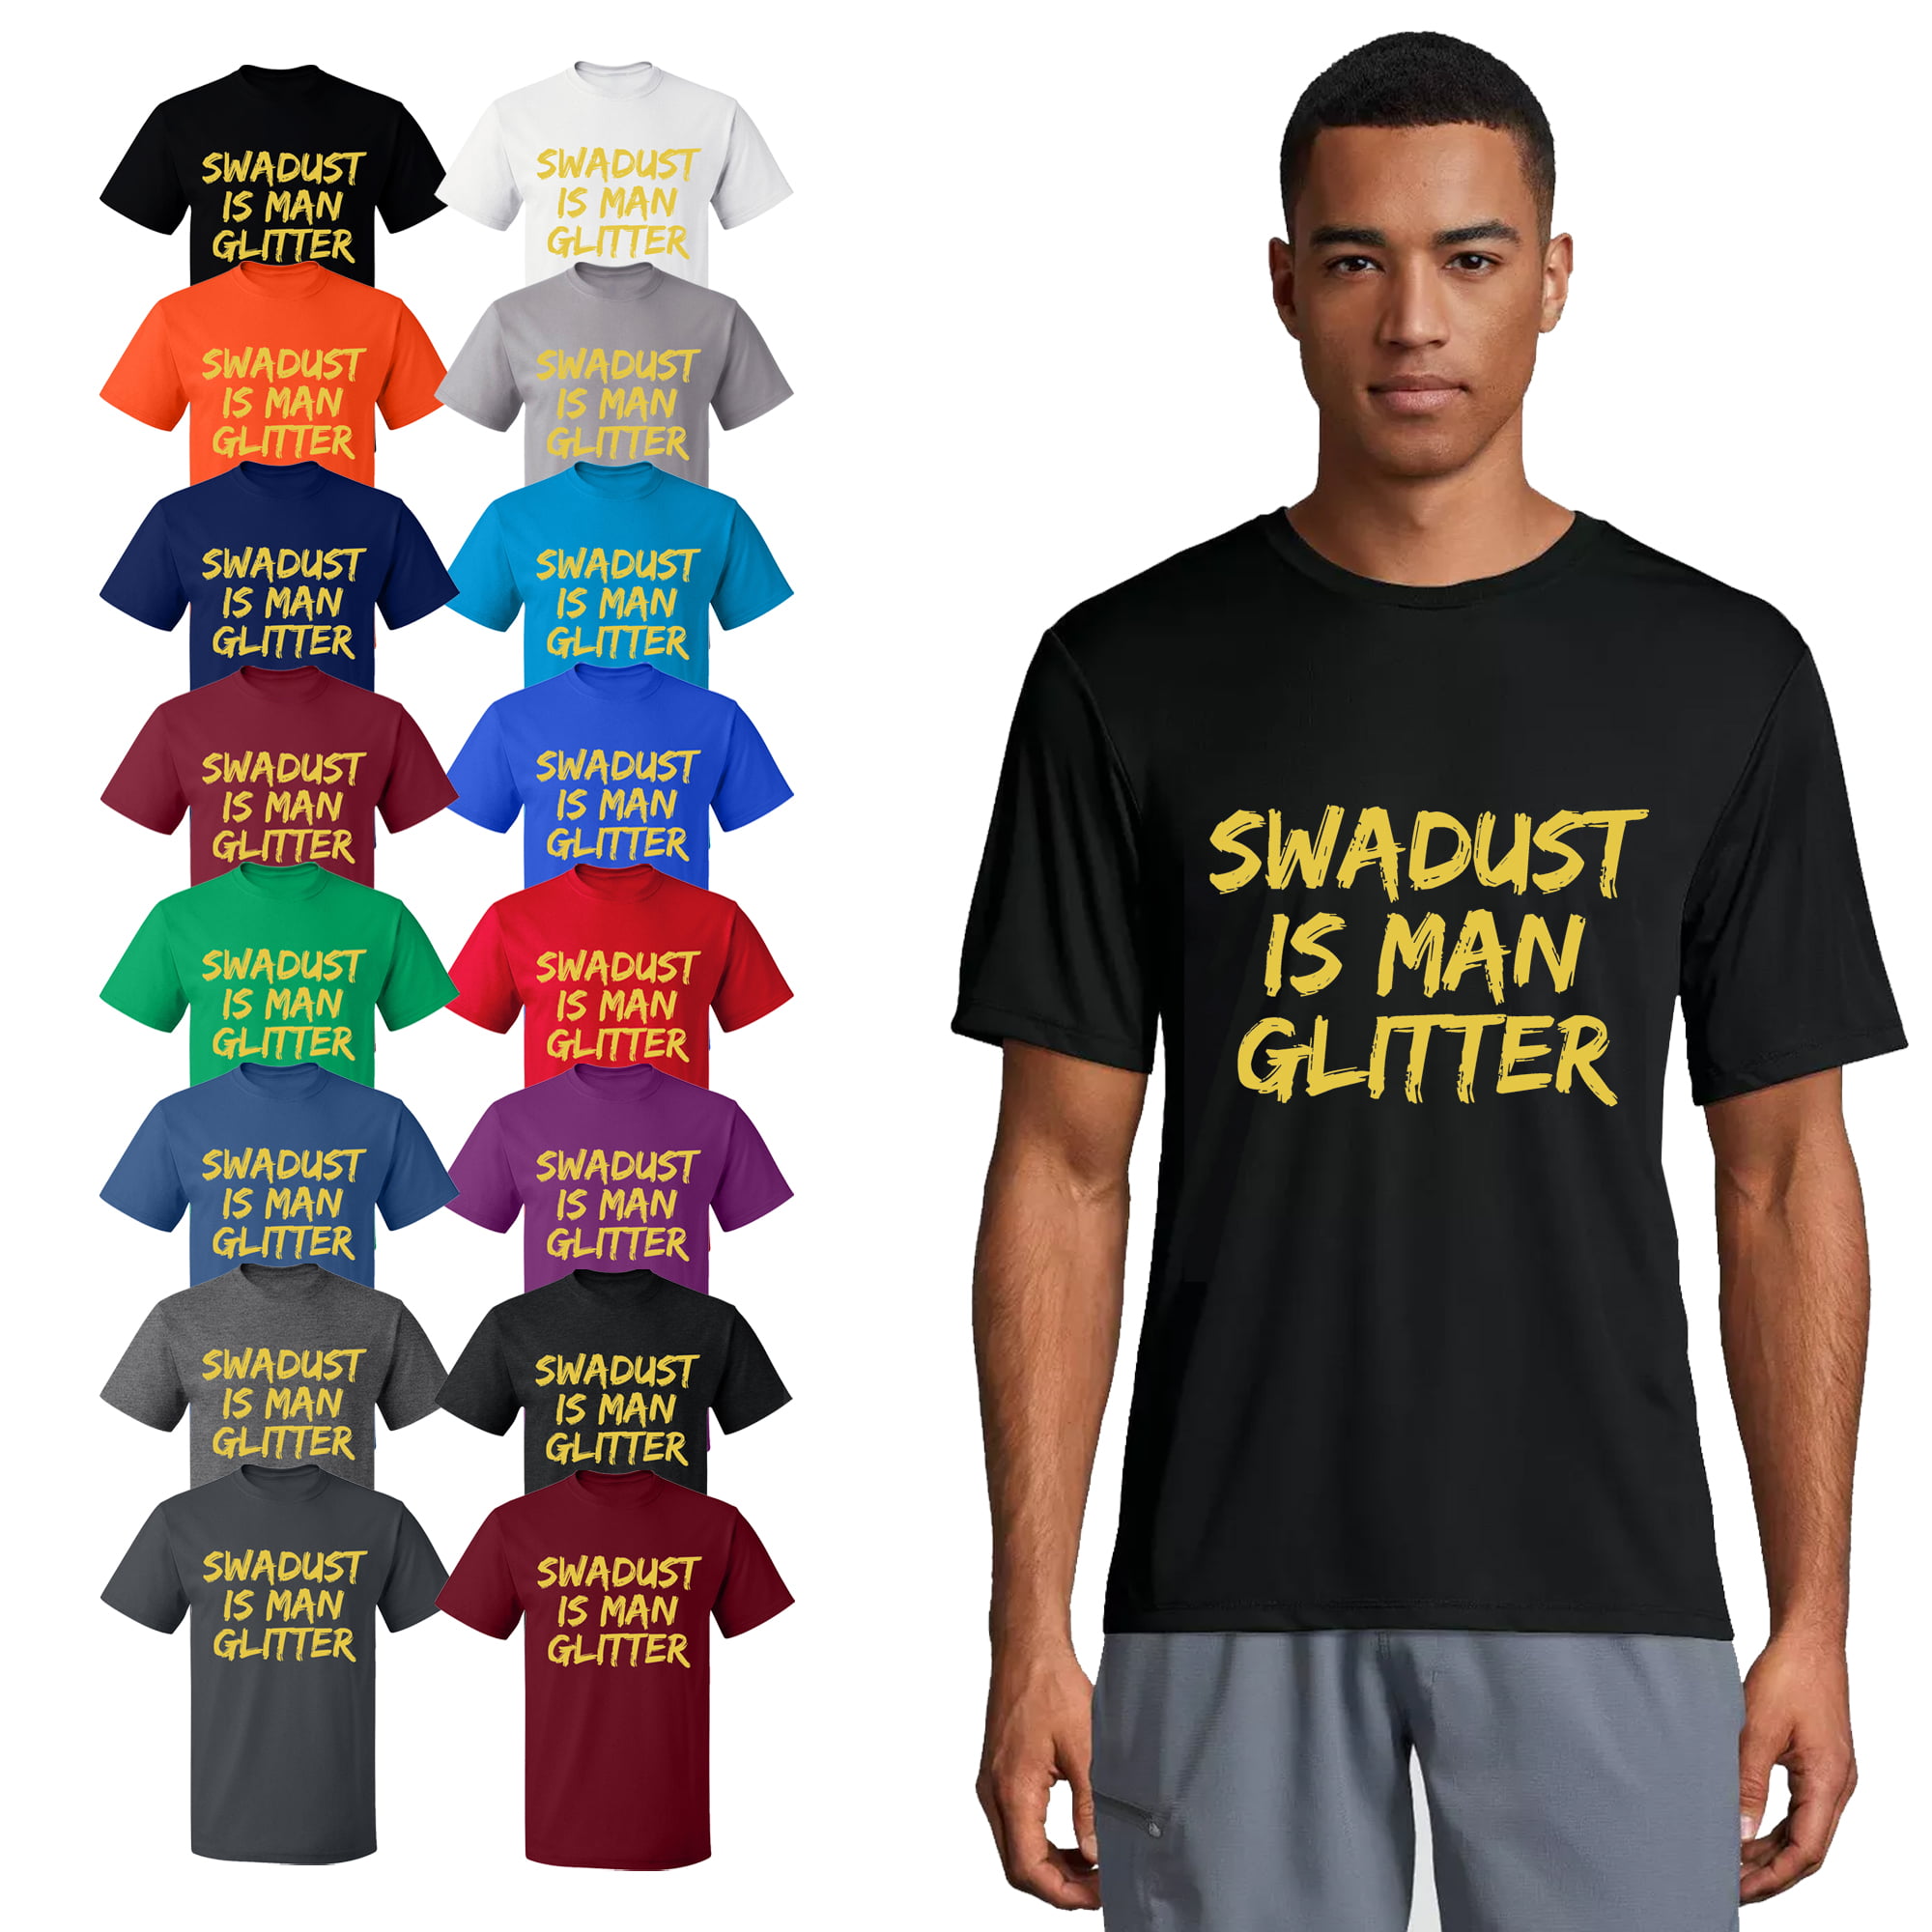 OXI T-Shirt - Swadust is Man Glitter, Basic Casual T-Shirt for Men's and  Women Fleece T-Shirt Short Sleeve - Navy Blue 3X-Large